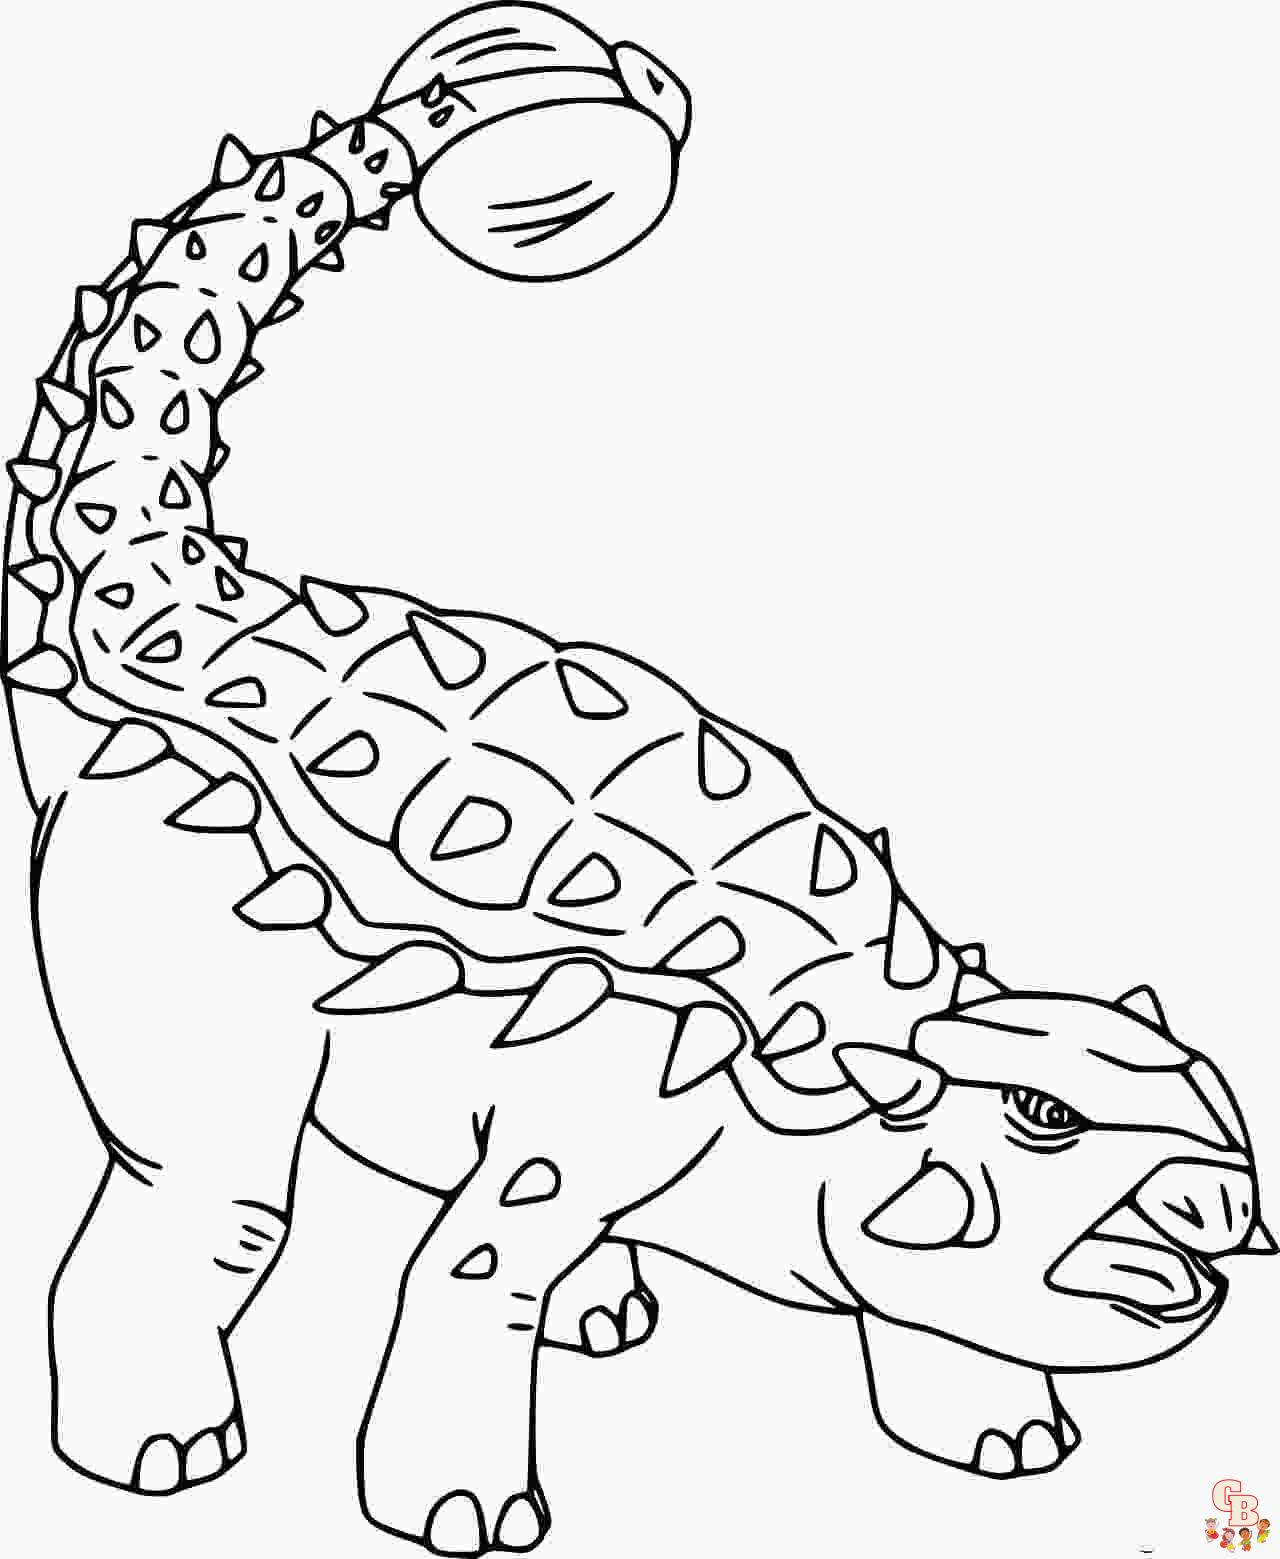 Ankylosaurus Ausmalbilder fuer kinder